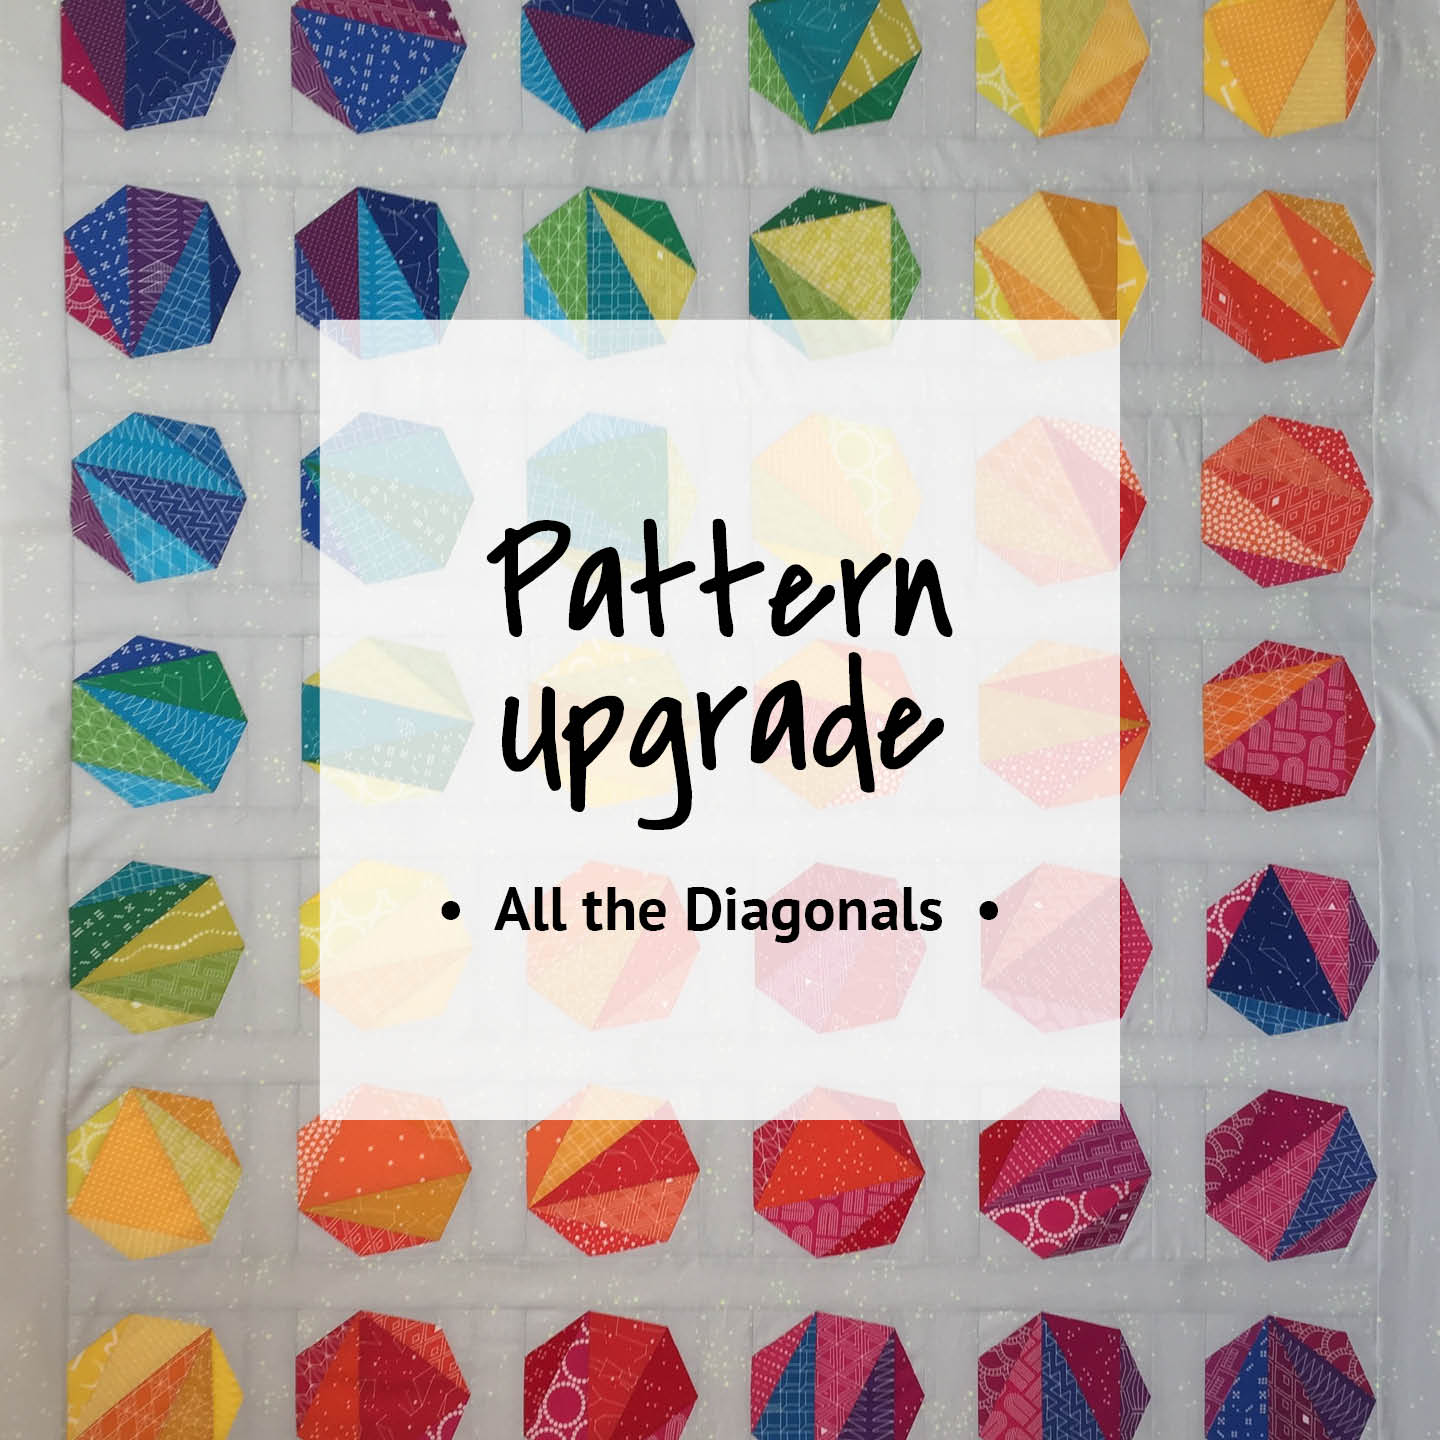 Pattern Upgrade "All the Diagonals" | mellmeyer.de